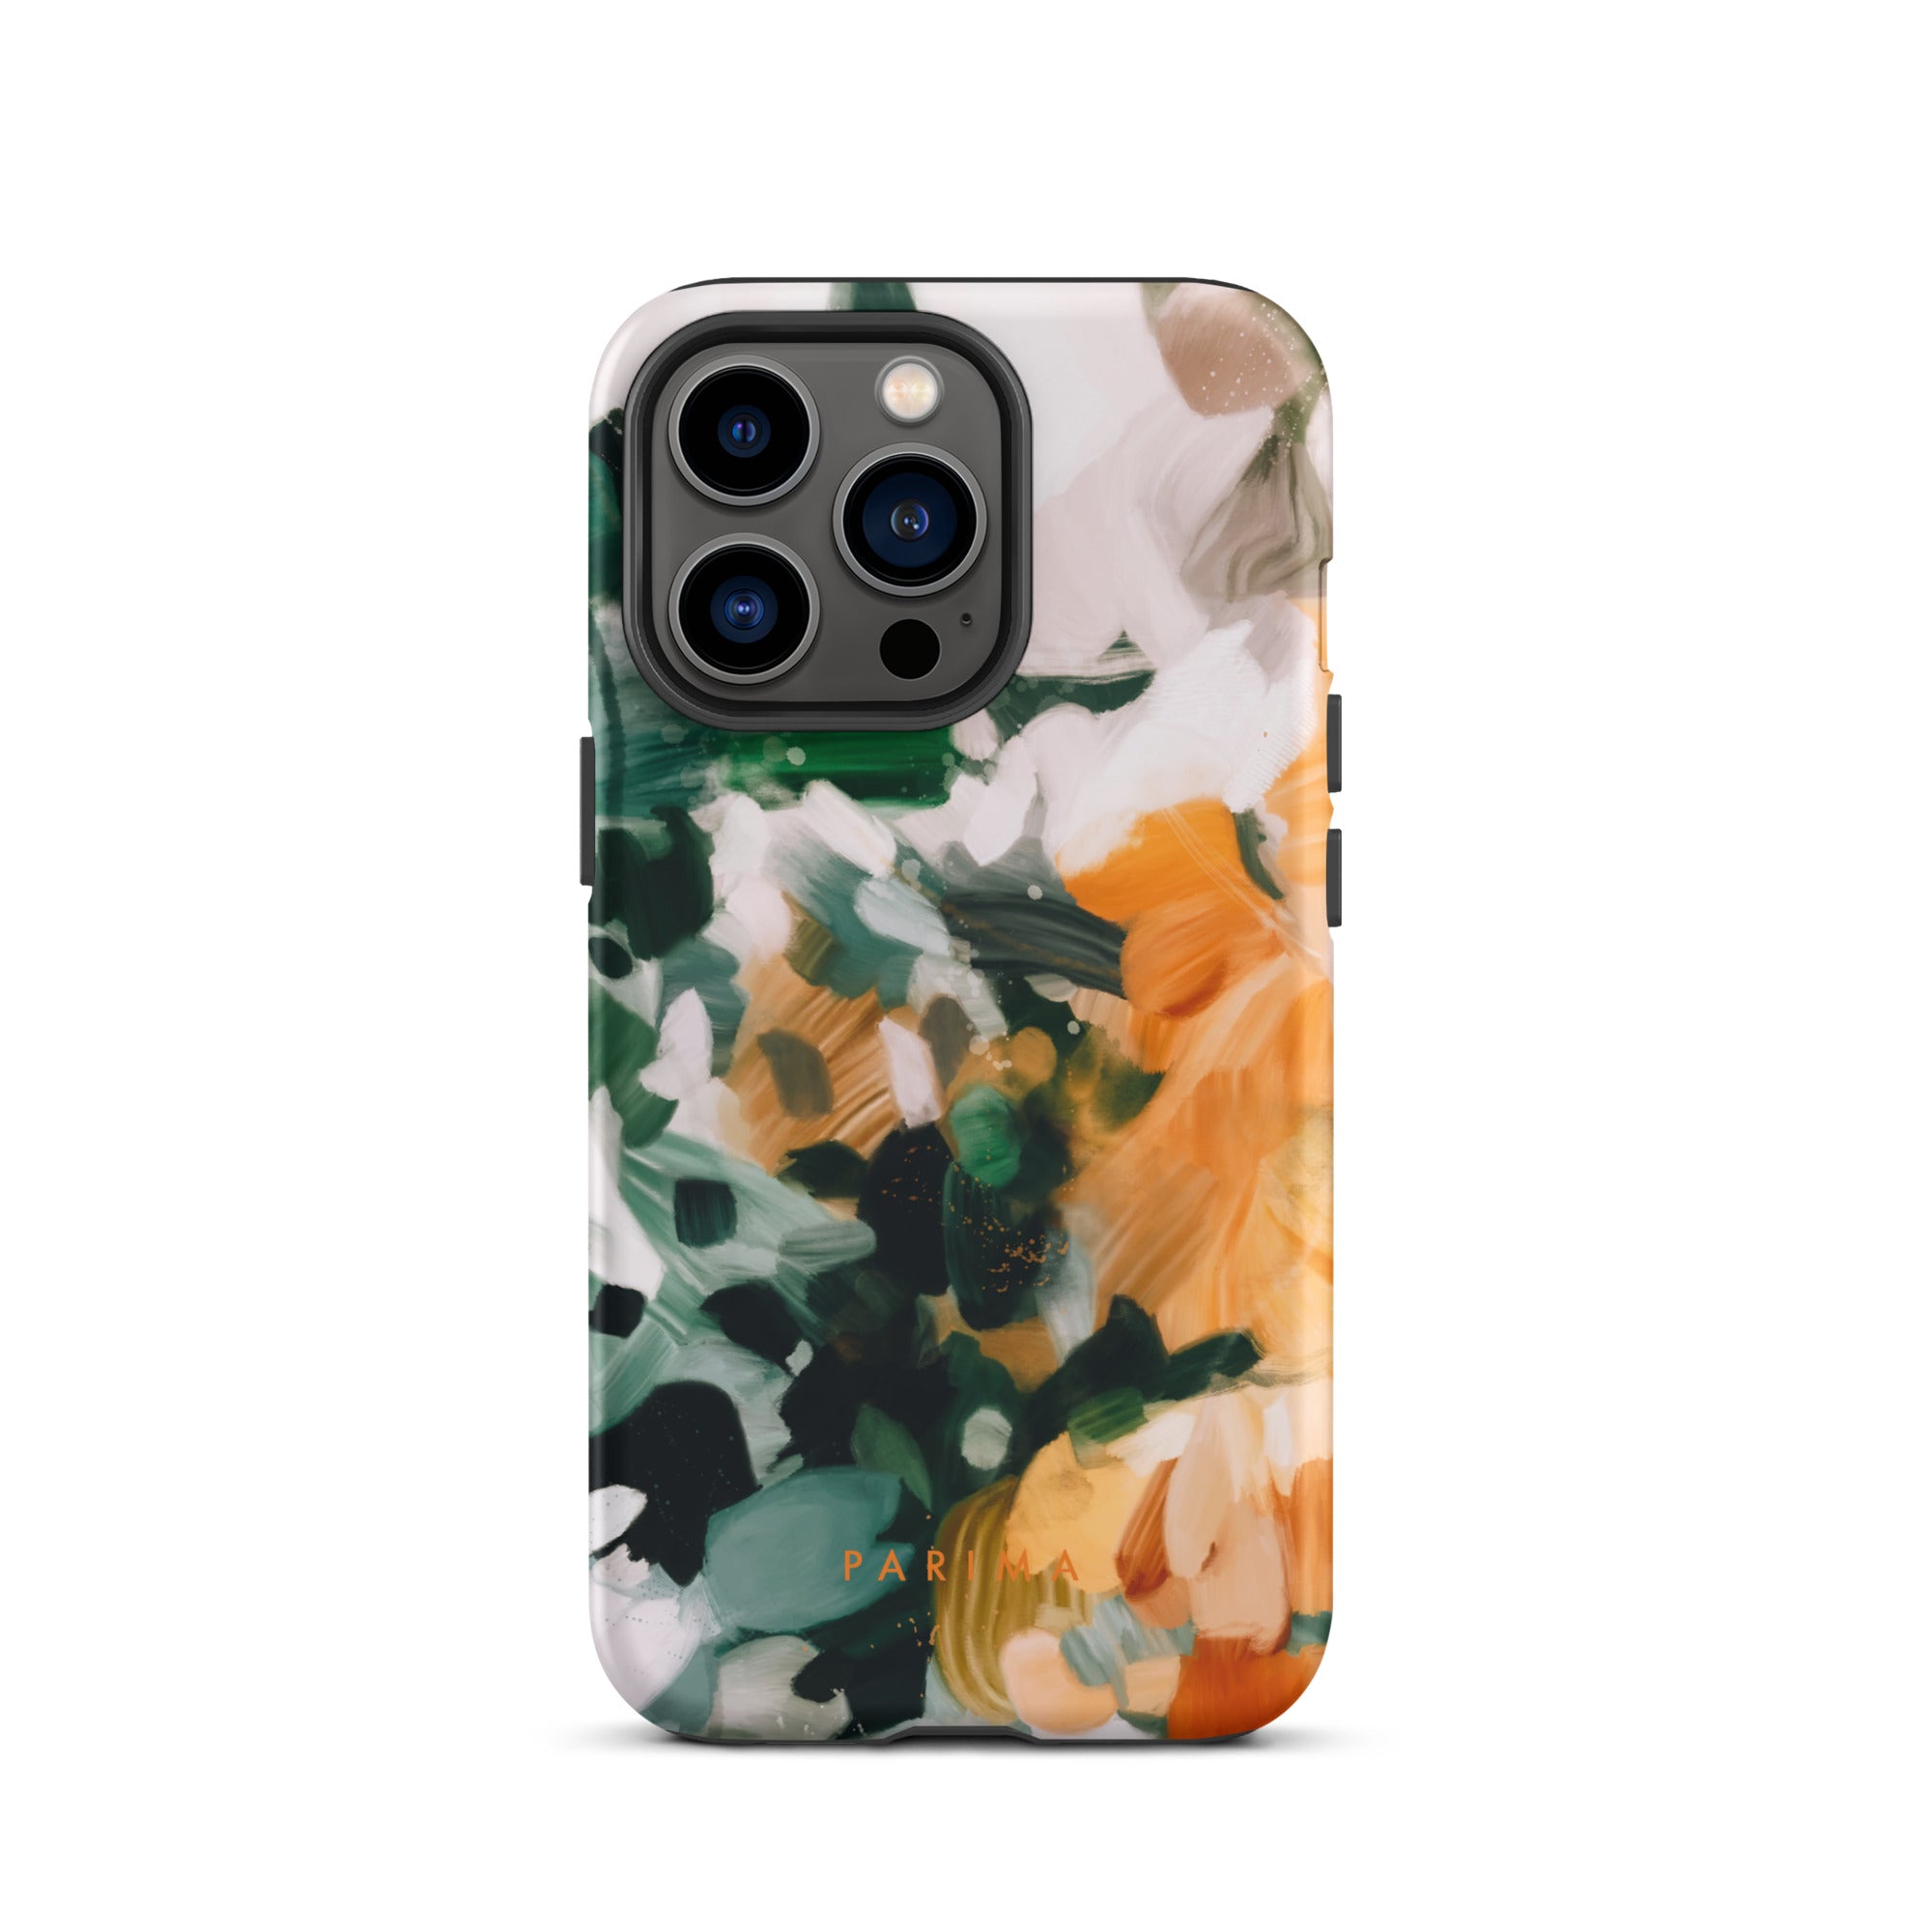 Aspen, green and orange abstract art - iPhone 13 Pro tough case by Parima Studio